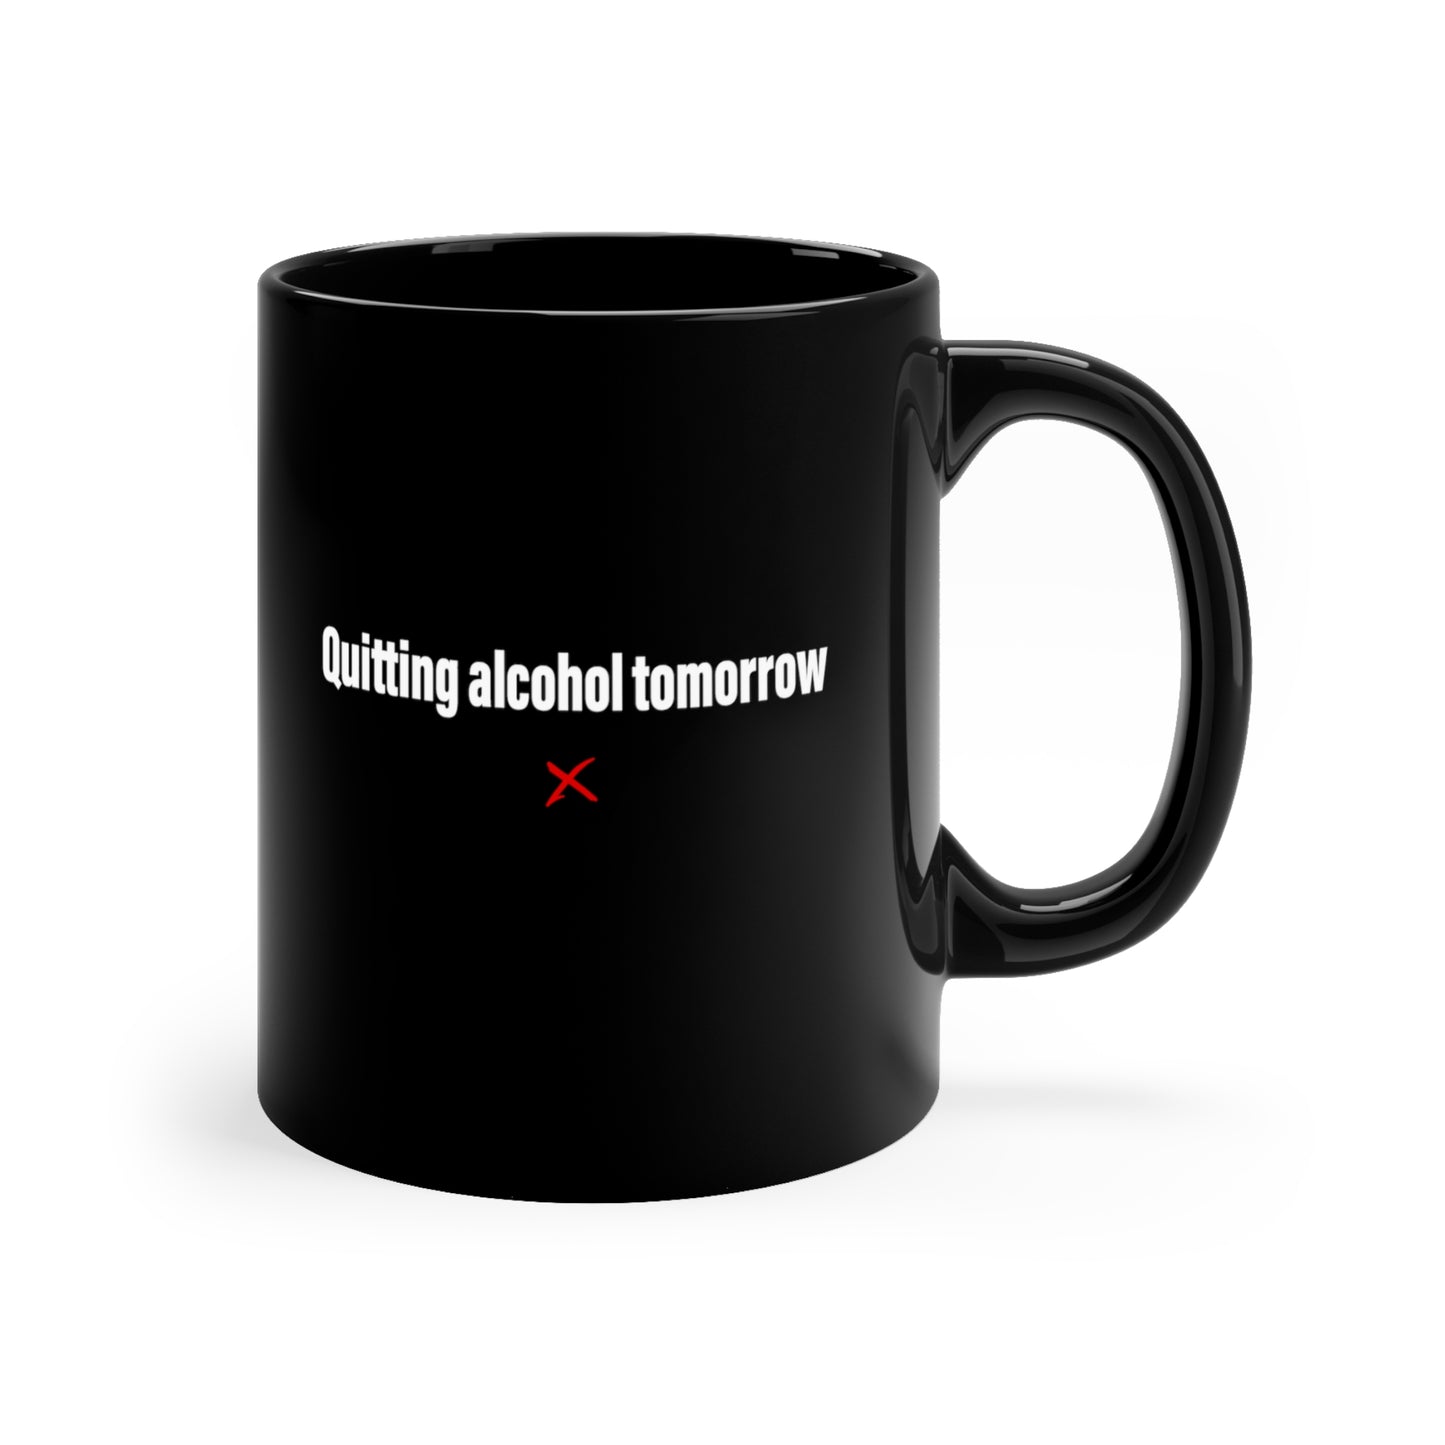 Quitting alcohol tomorrow - Mug